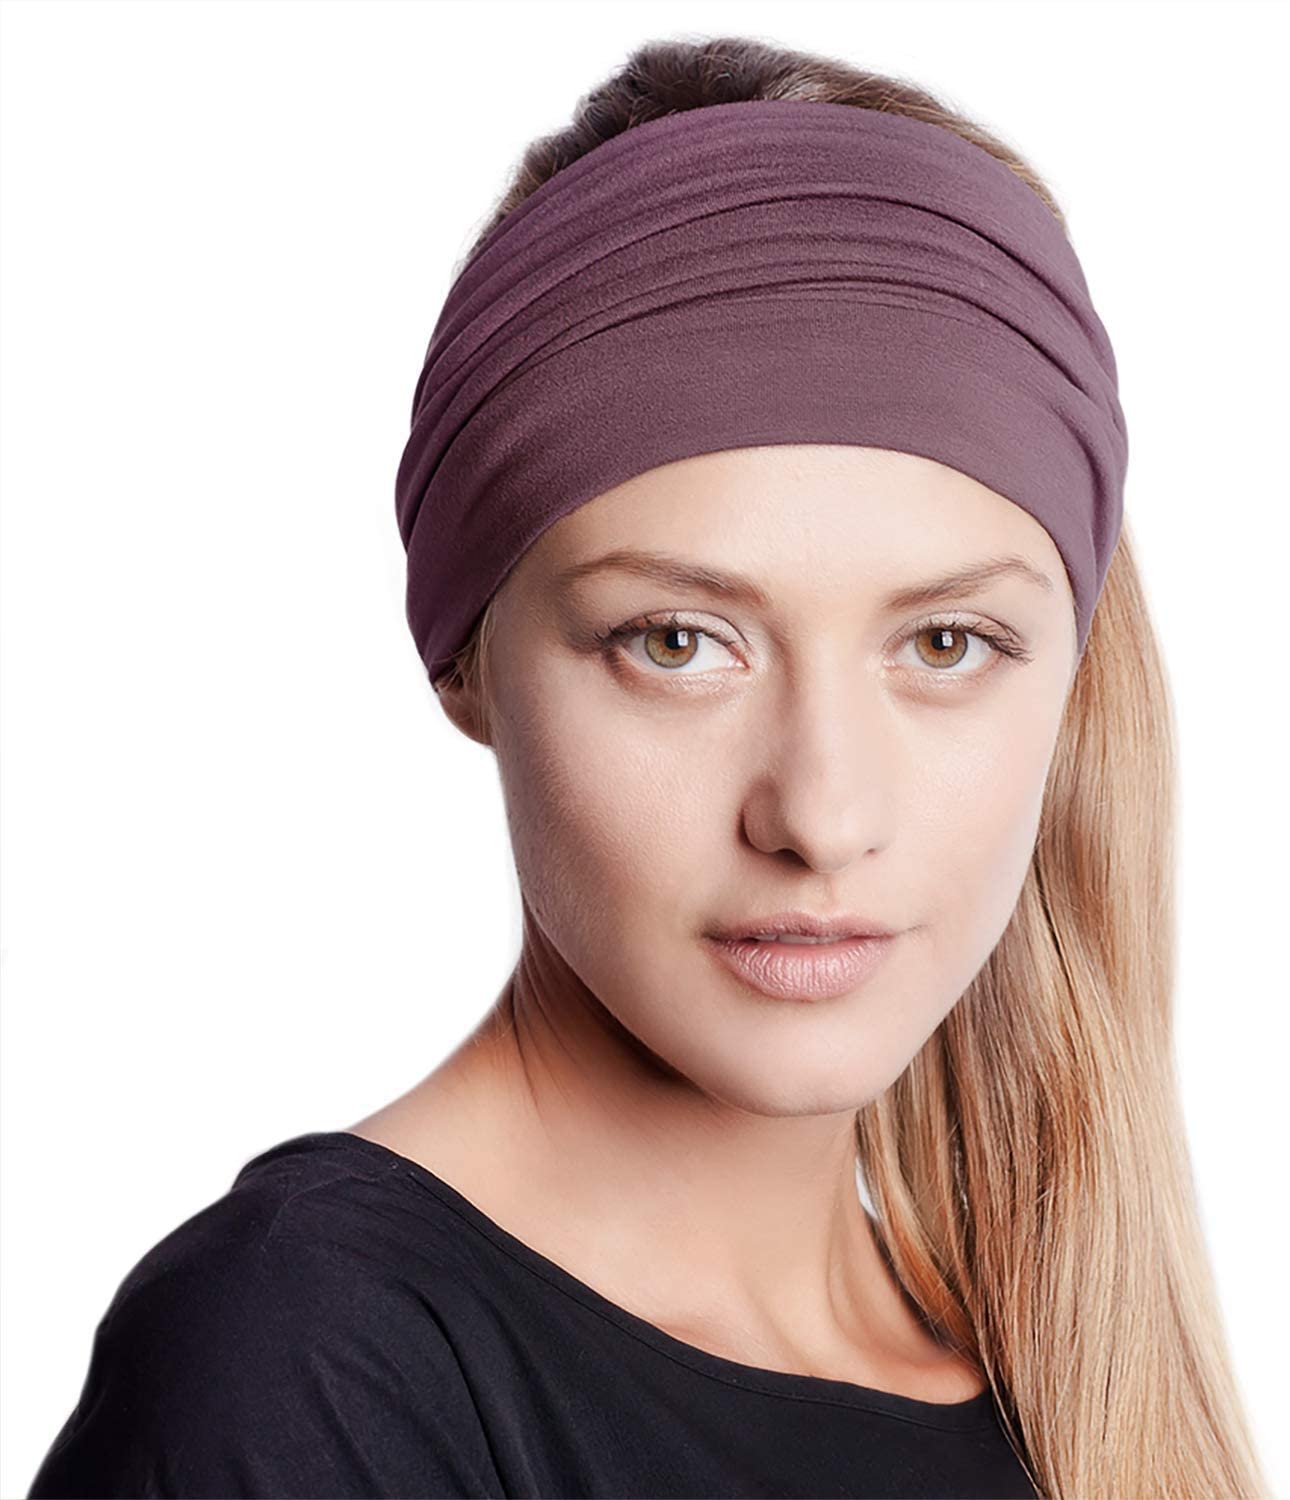 BLOM Moveable Knot Headband For Women